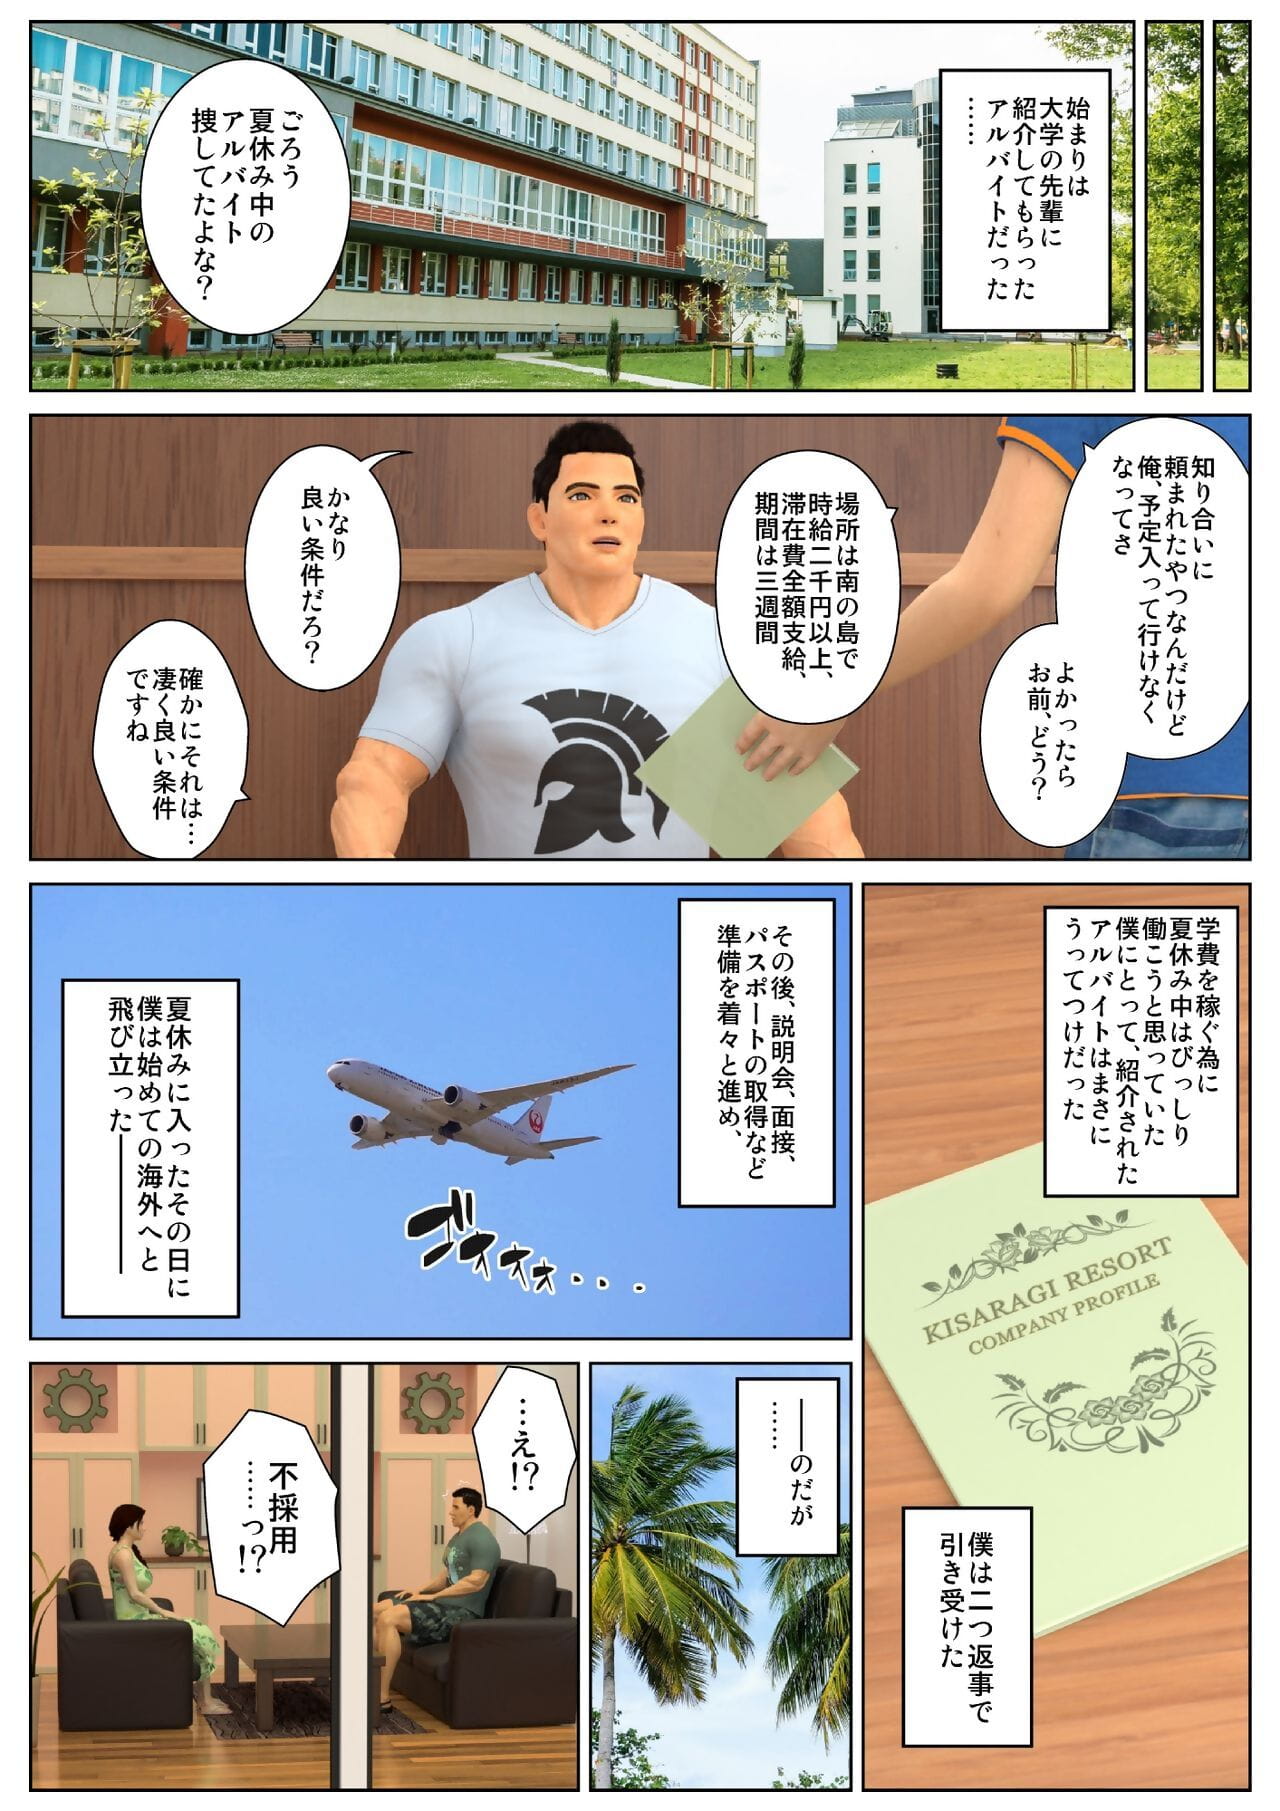 Boshisoukan Resort e Youkoso! 3 page 1